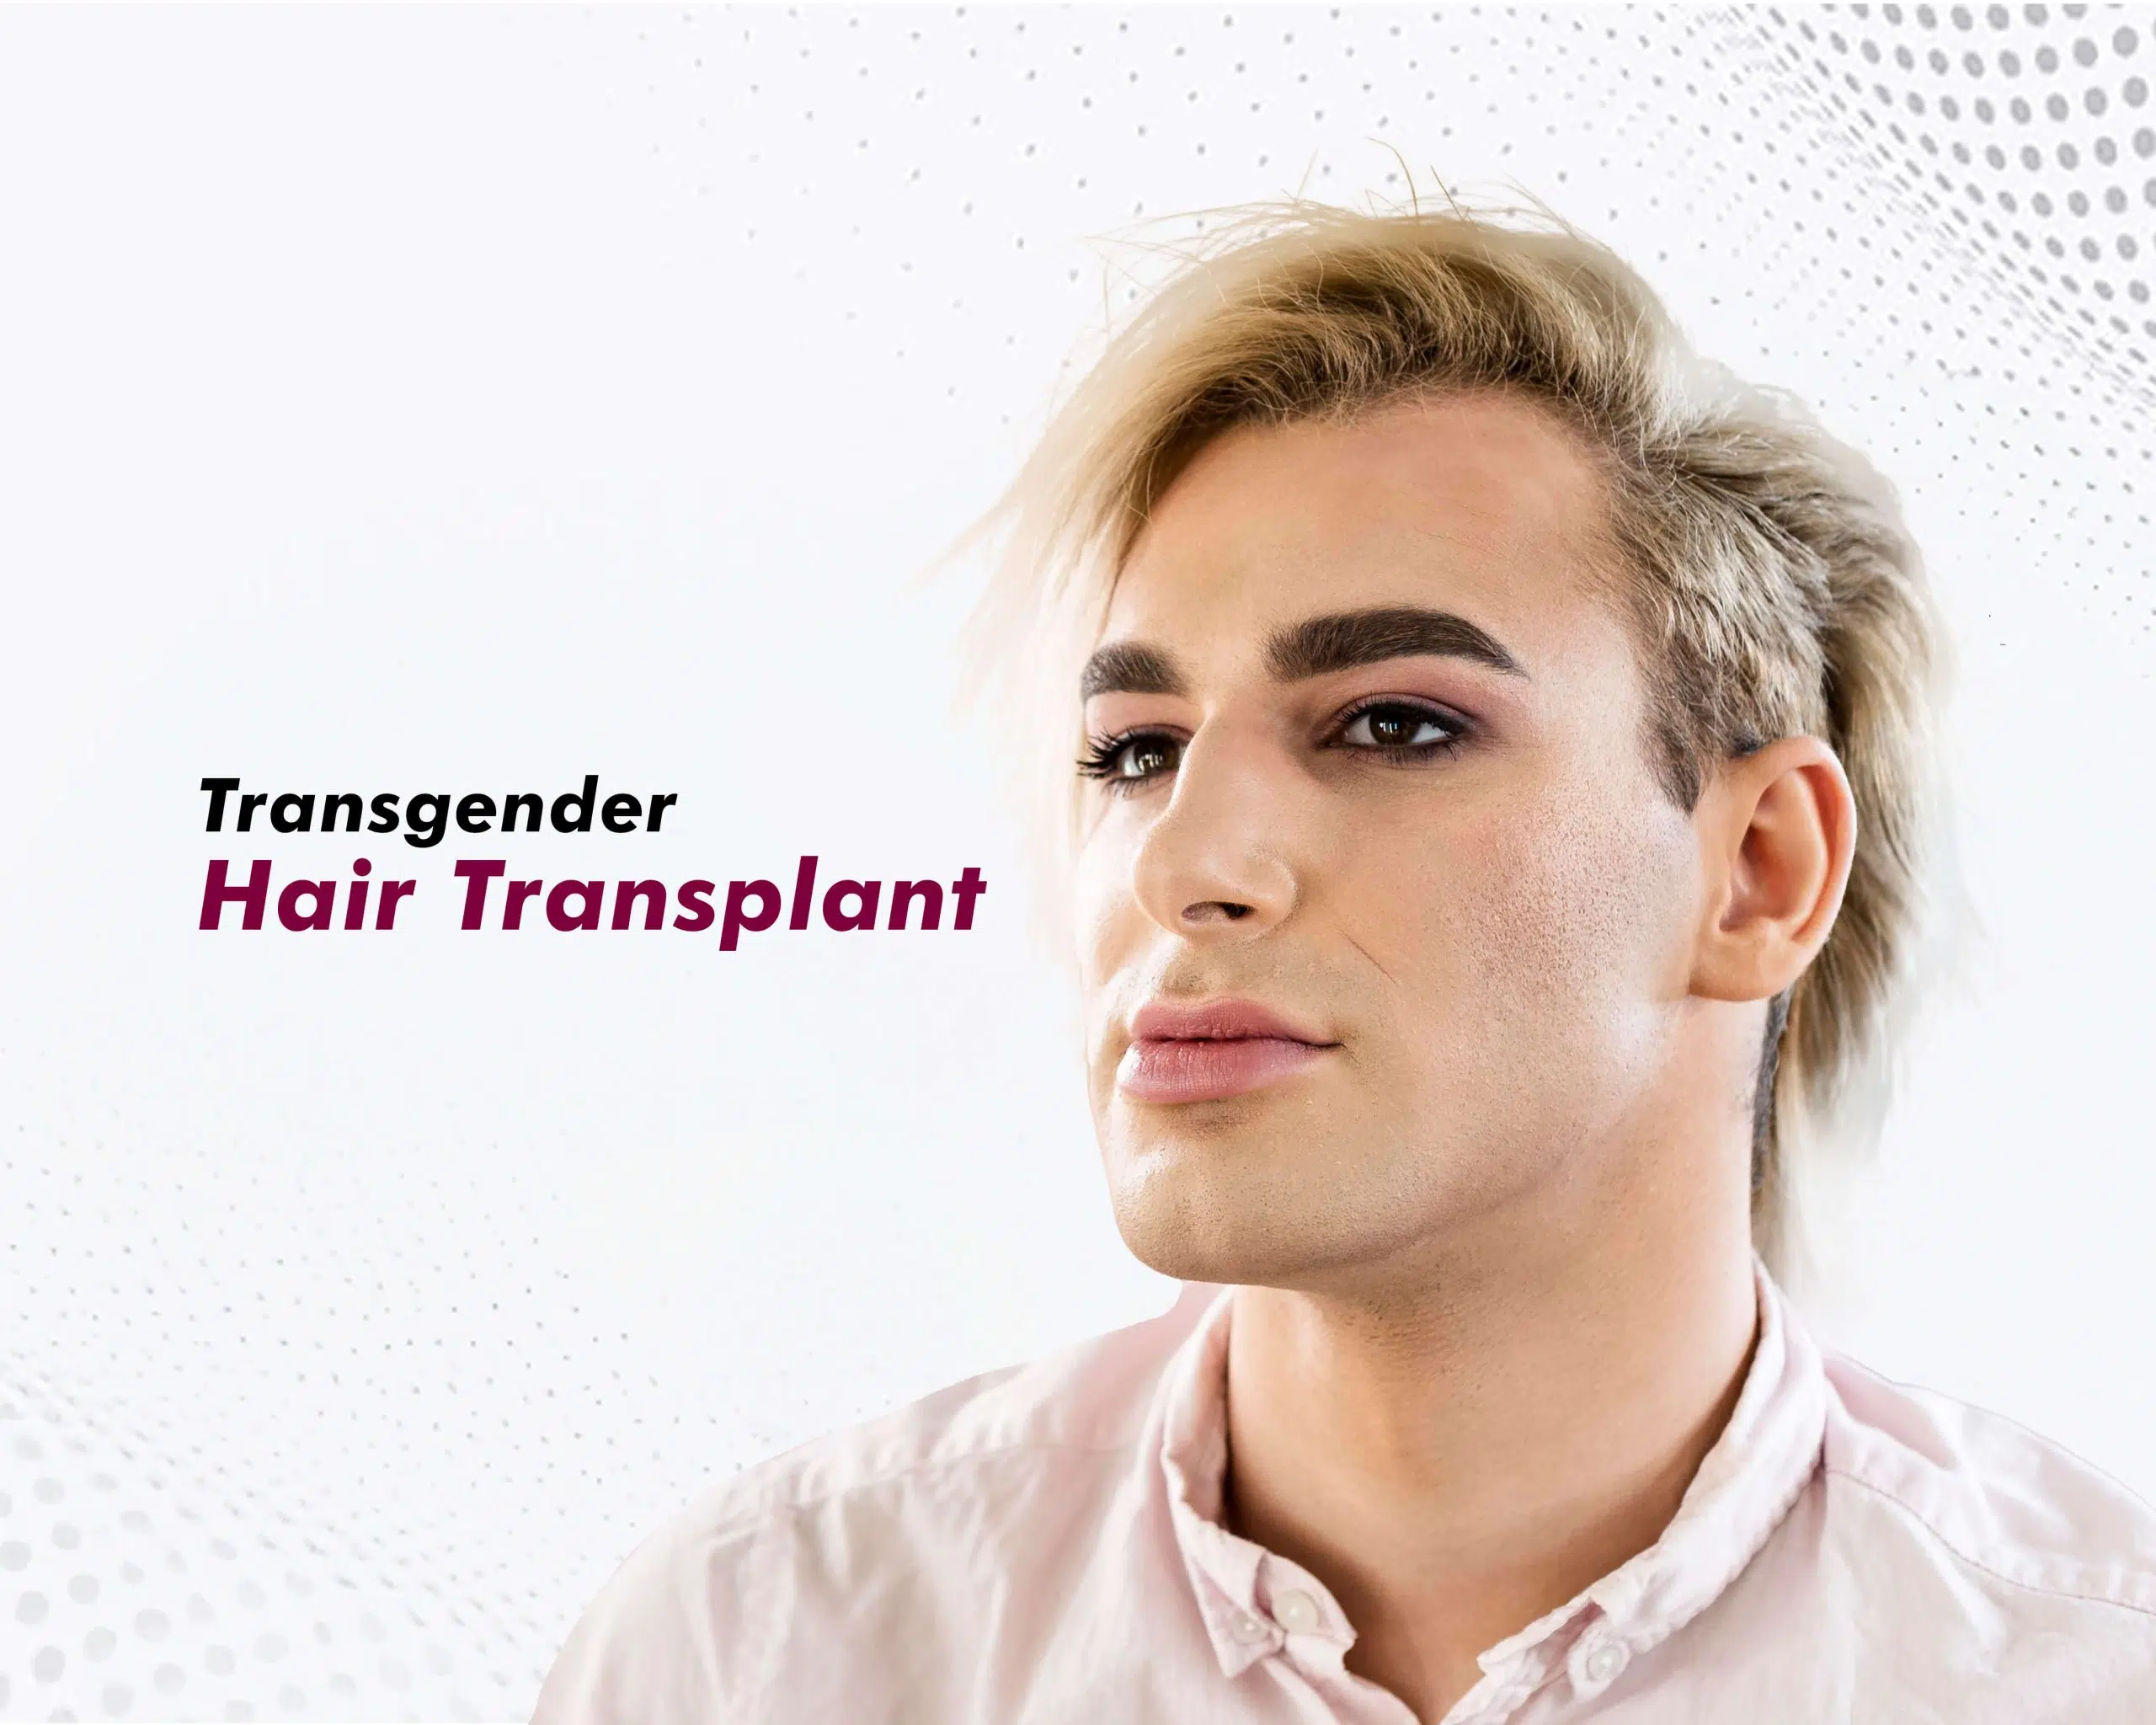 Transgender Hair Transplant